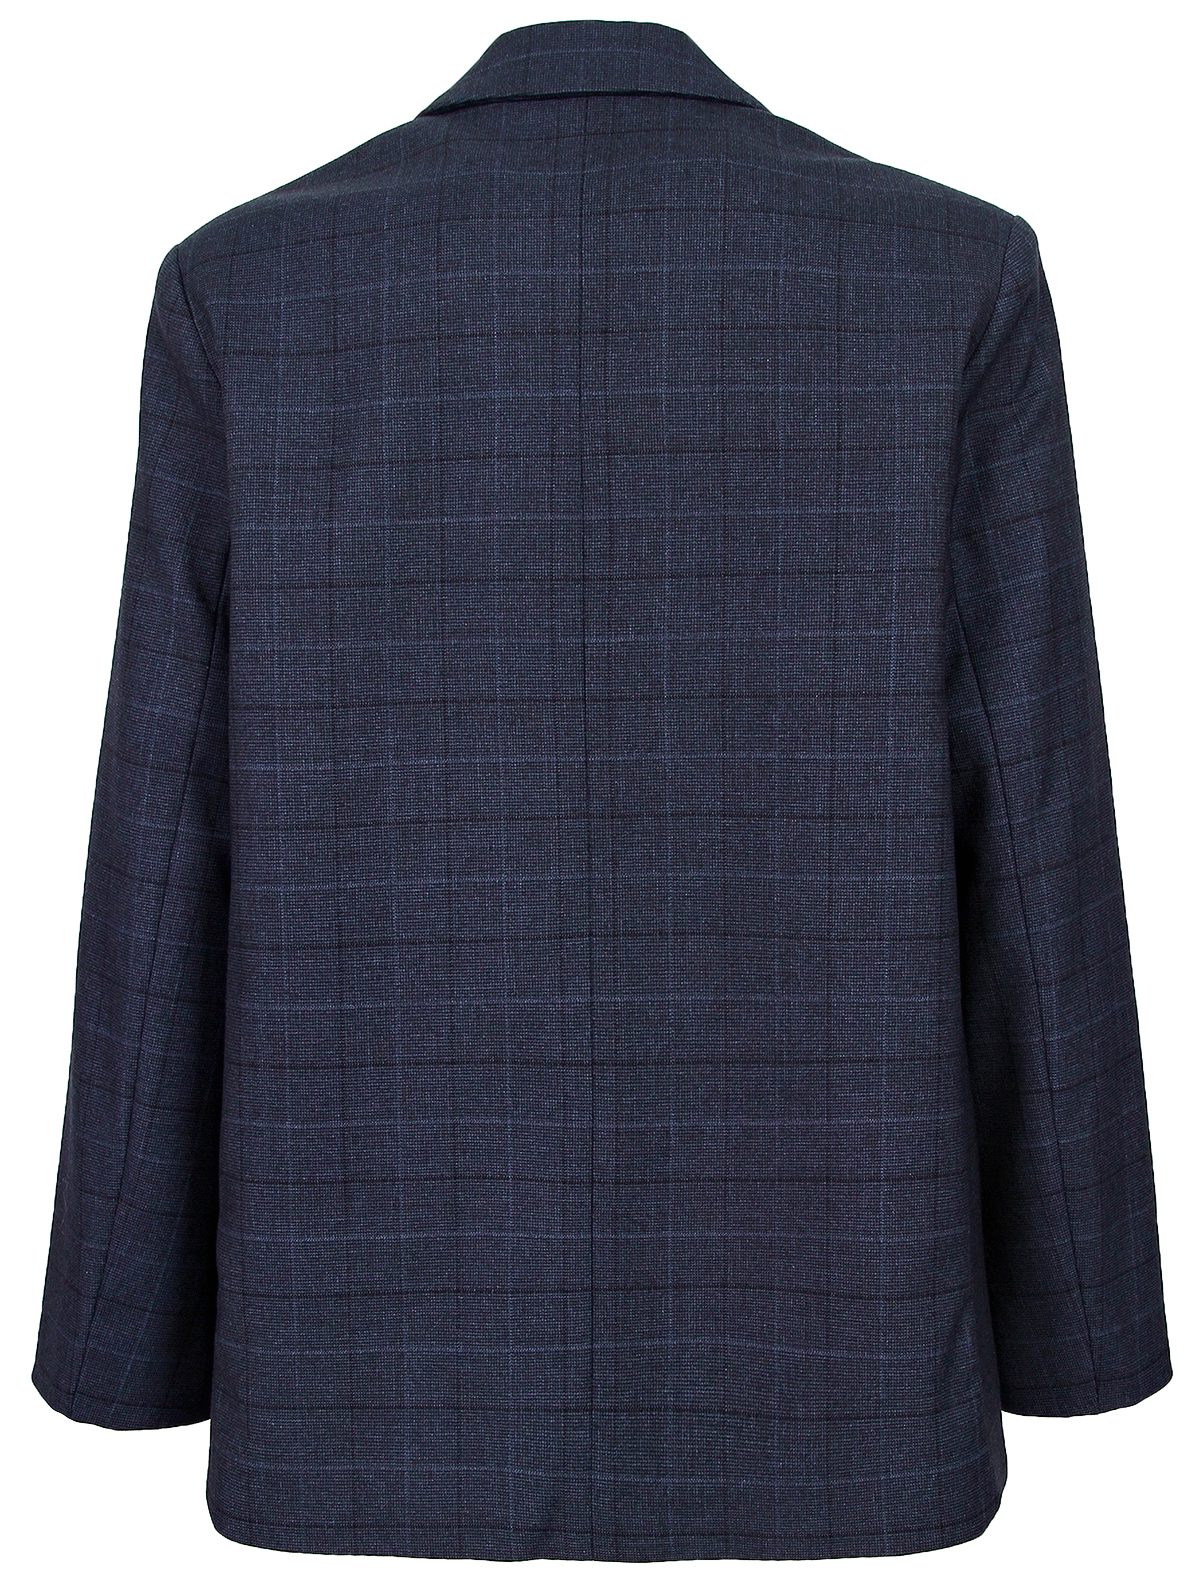 Пиджак SILVER SPOON 2575136, цвет синий, размер 7 1334509380288 - фото 7